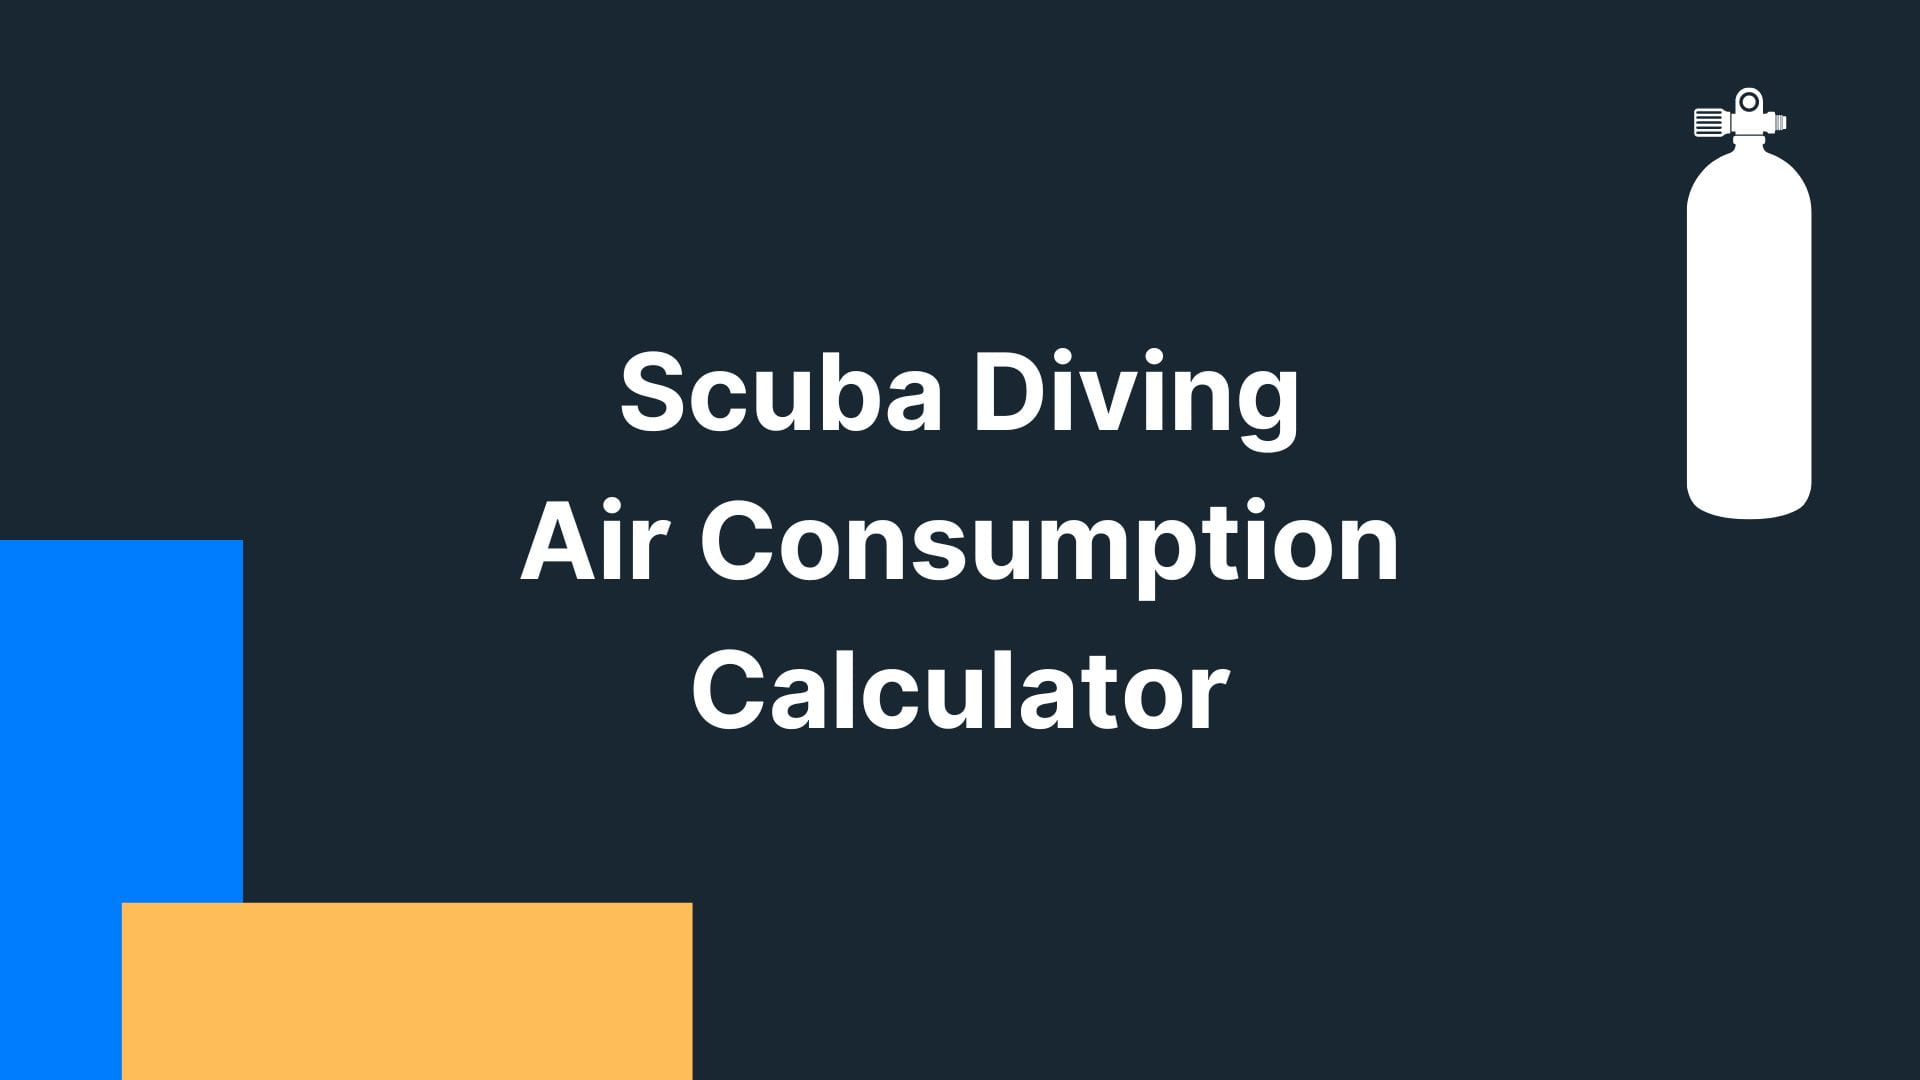 Scuba diving air consumption calculator